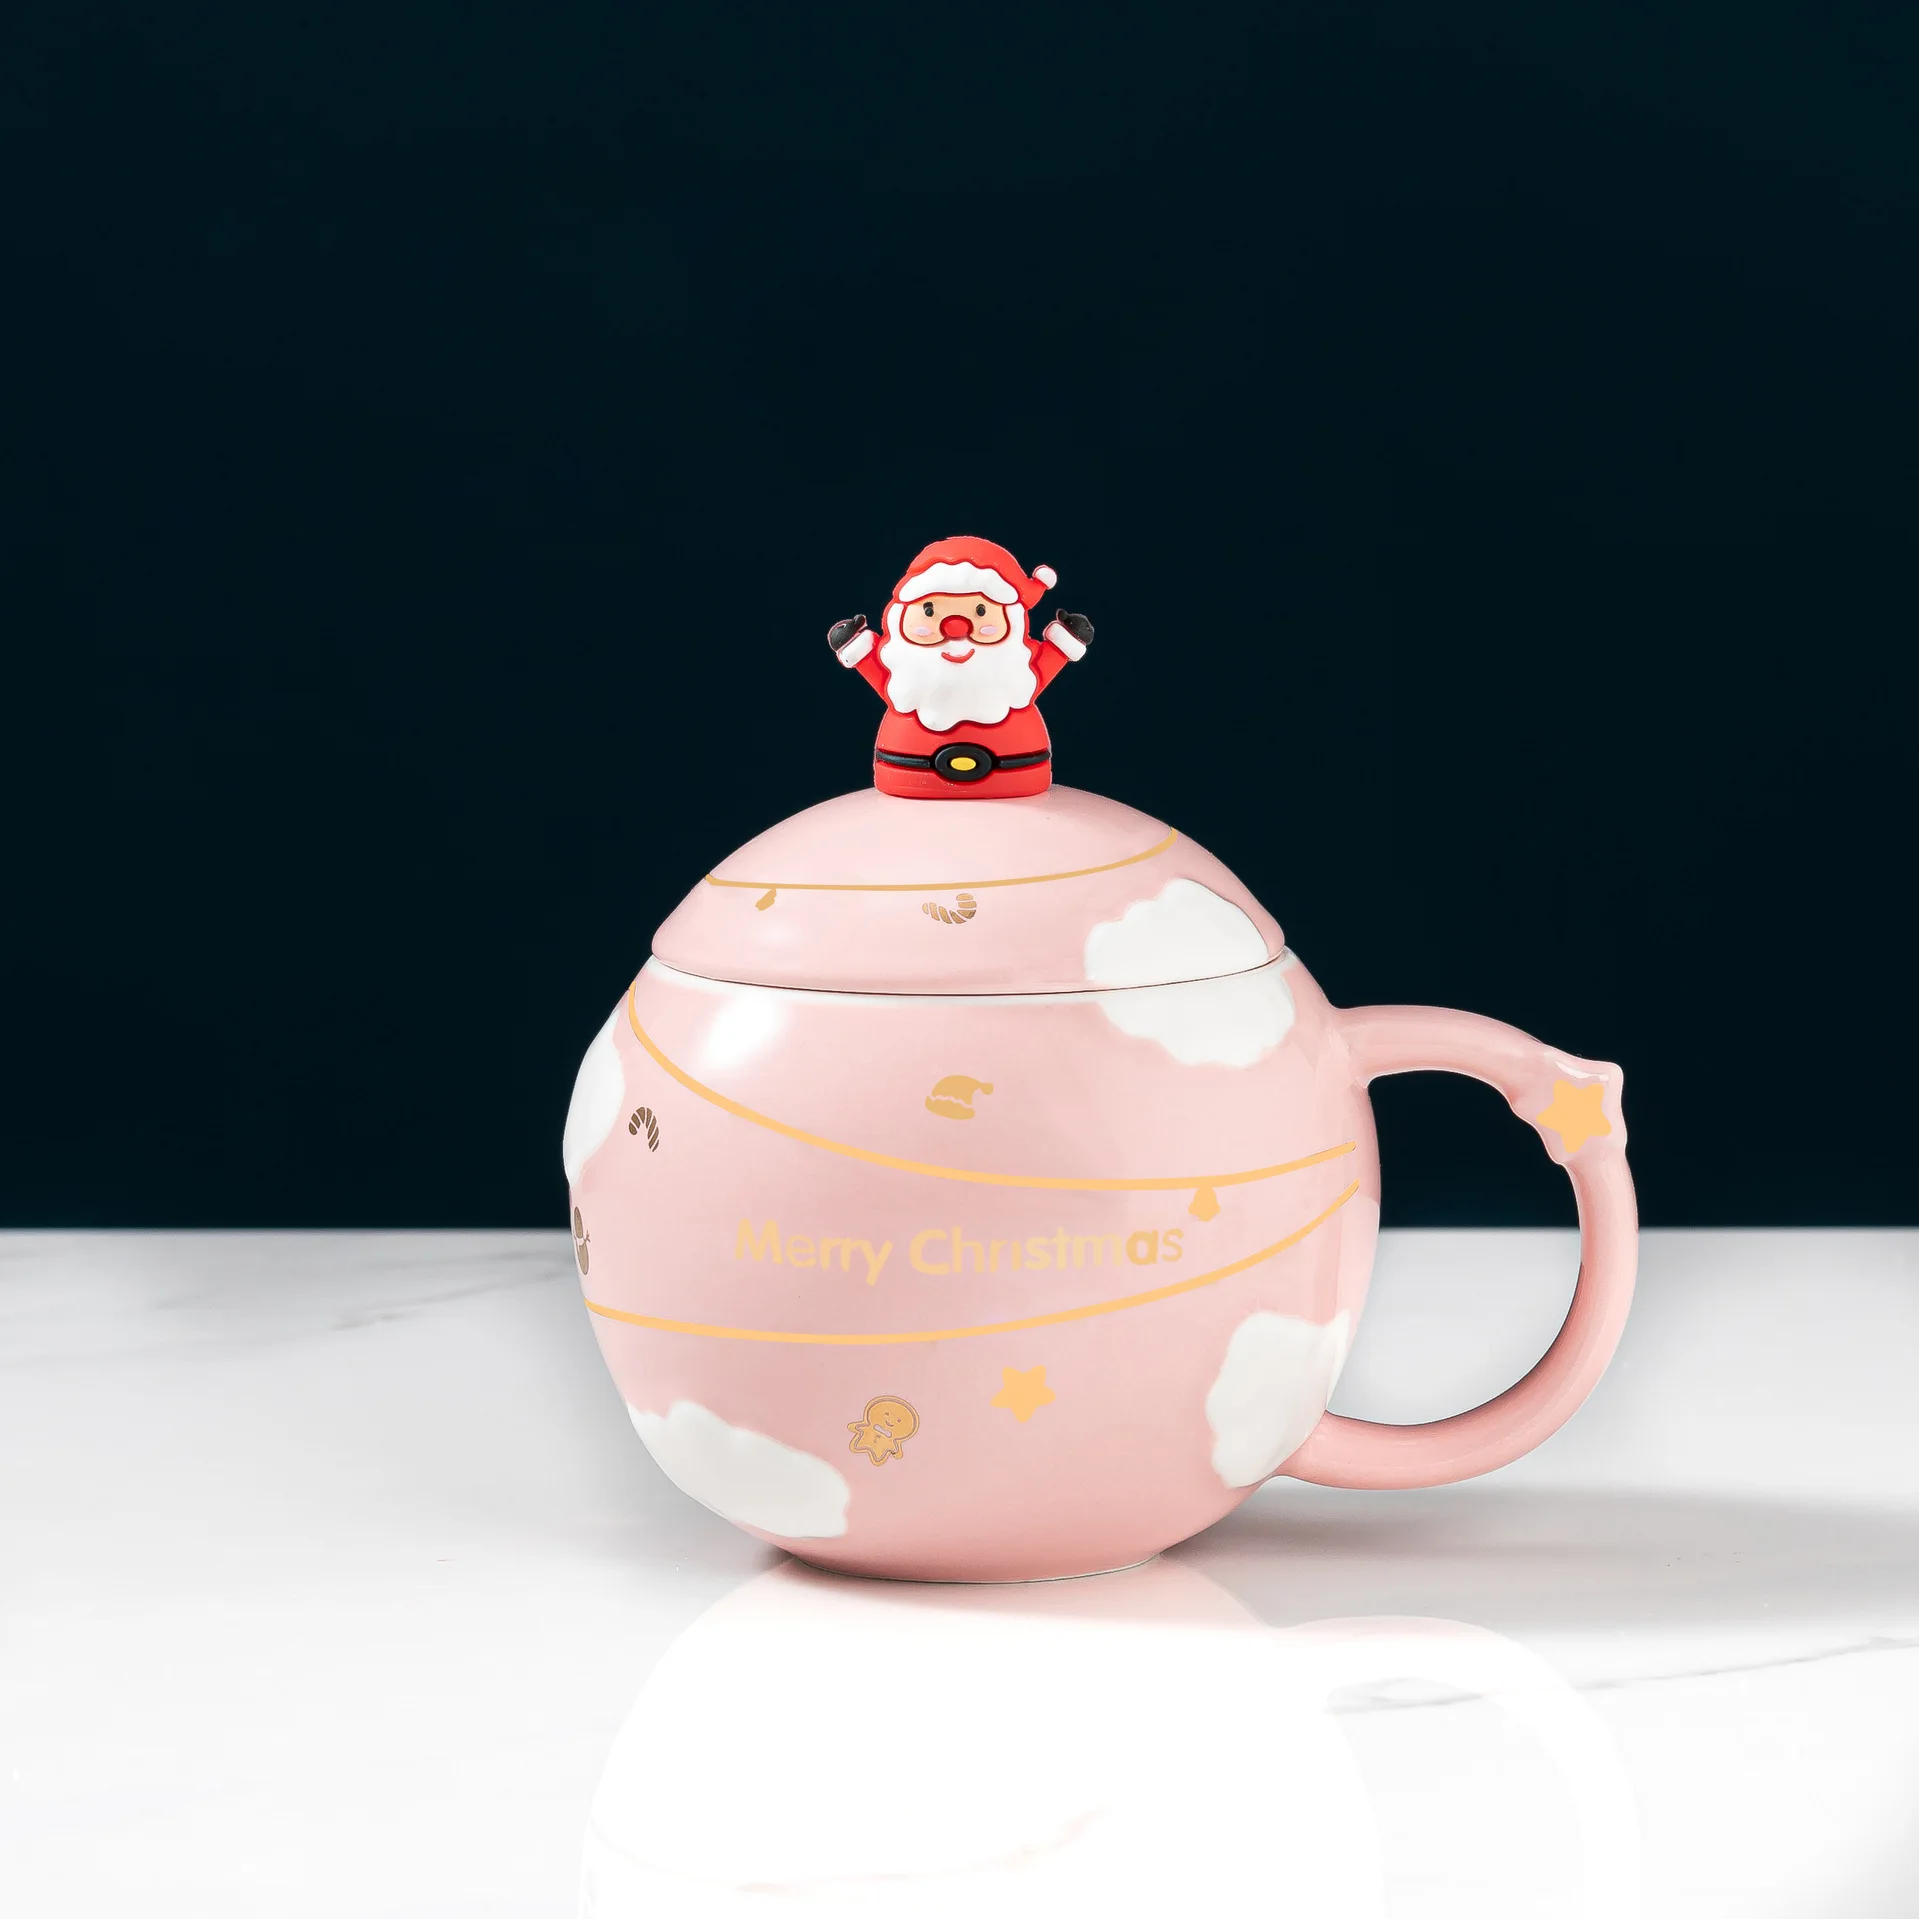 420ml christmas gift ceramic mug wholesale tea porcelain ceramic coffee and tea mugs cups